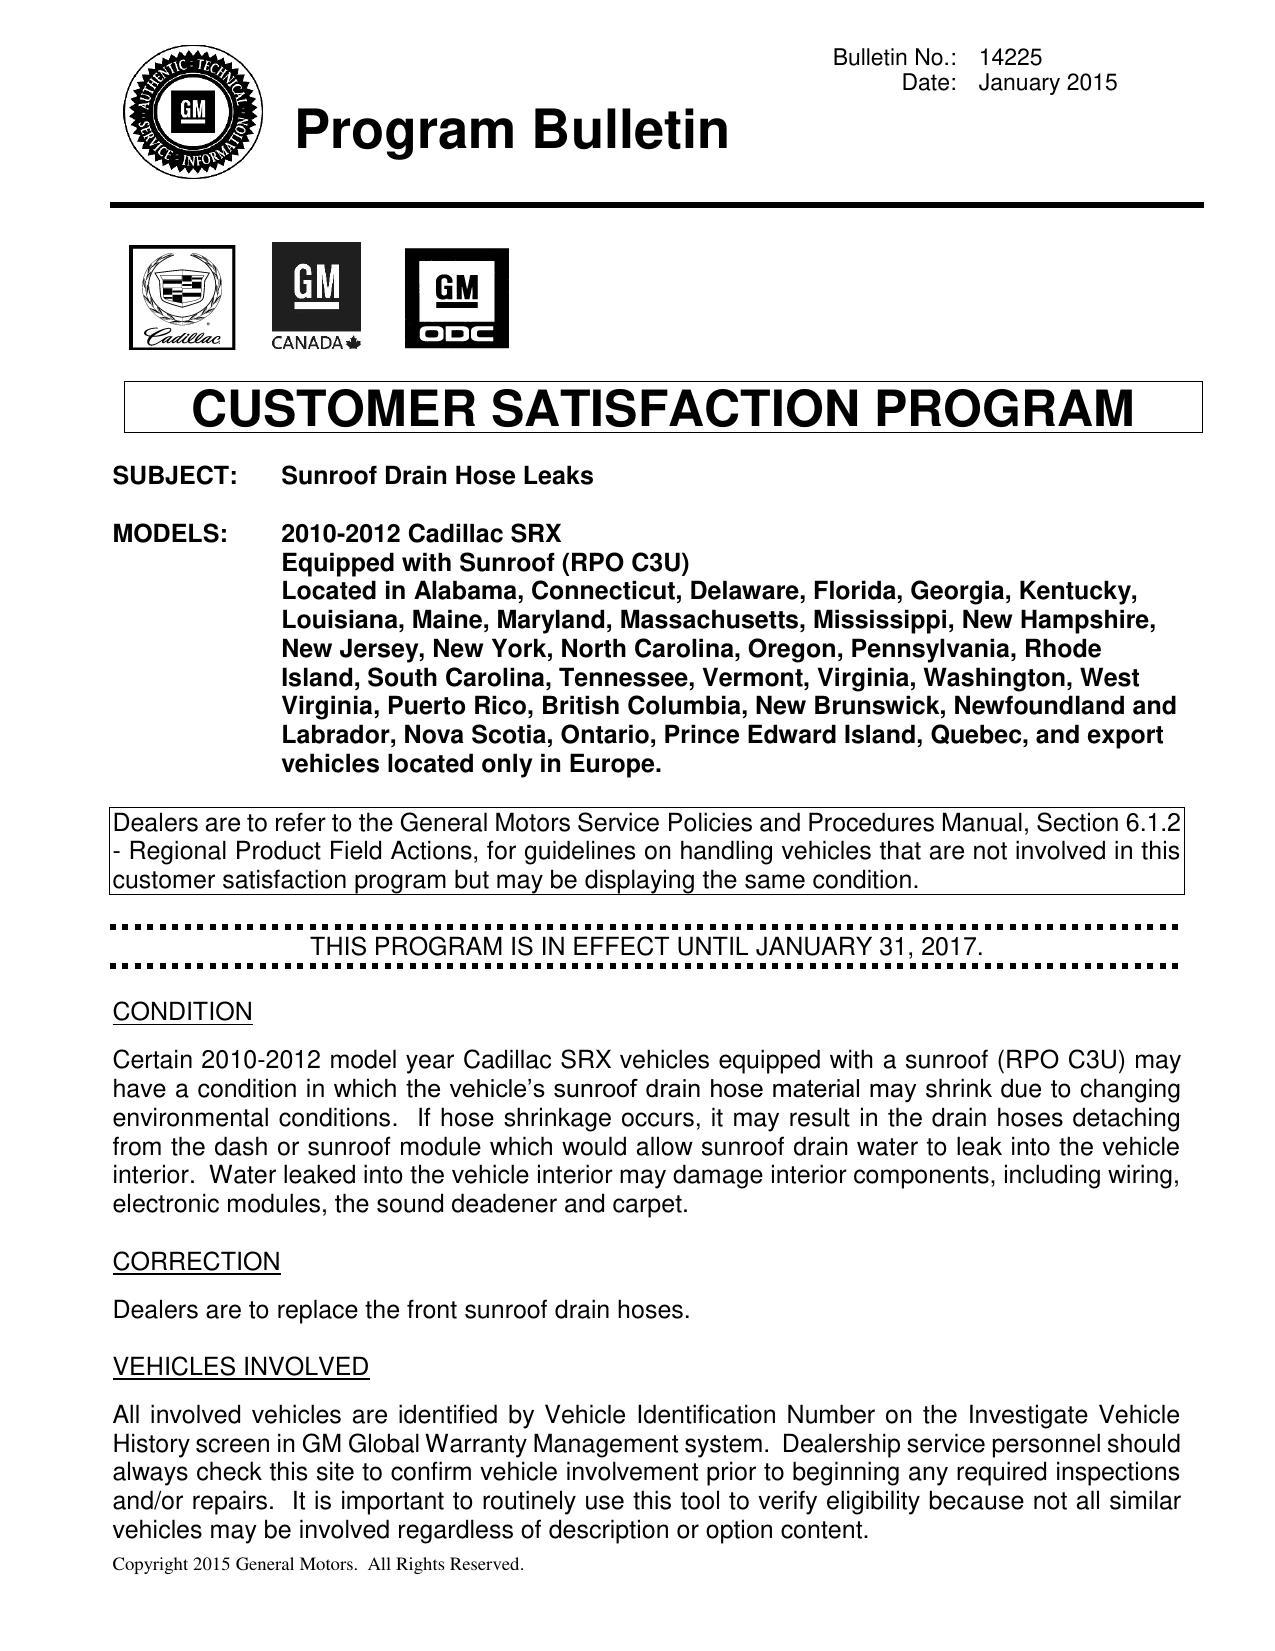 2010-2012-cadillac-srx-sunroof-drain-hose-leaks-customer-satisfaction-program.pdf